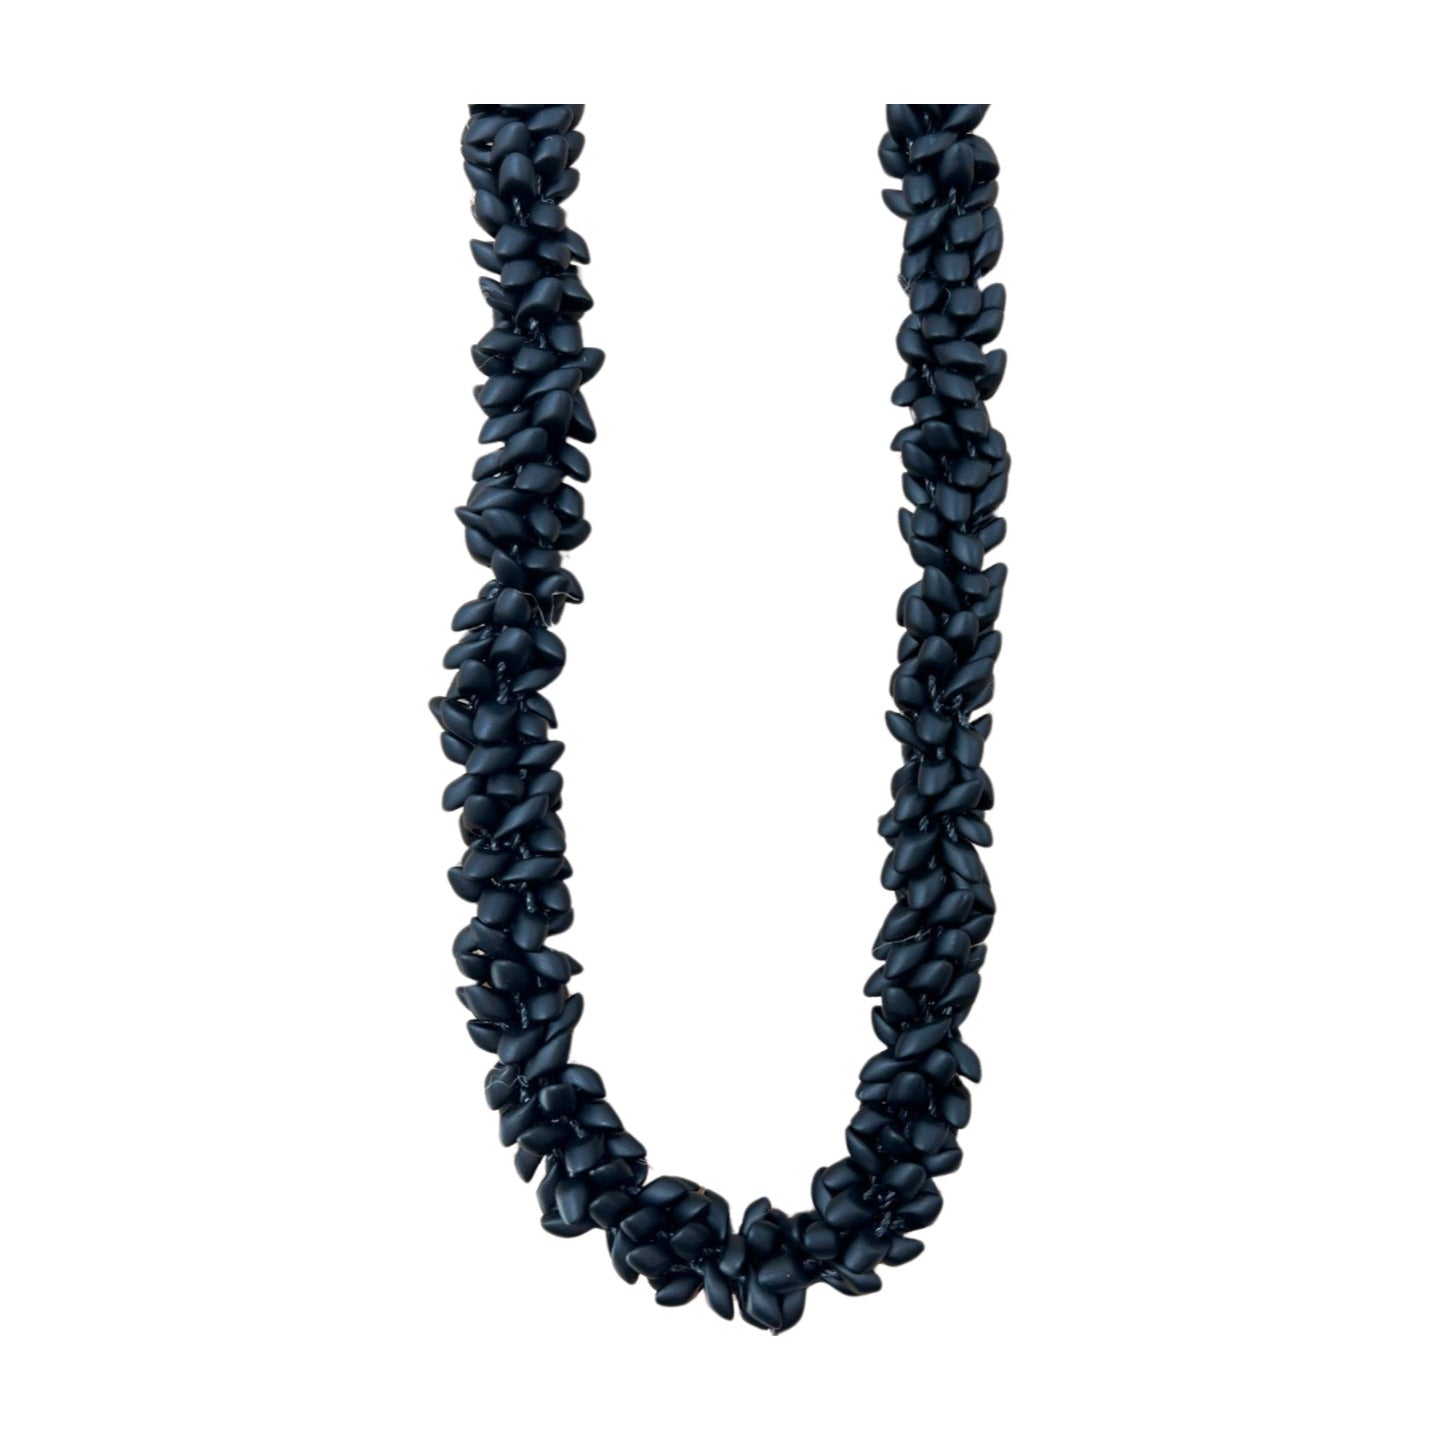 Pop-Up Mākeke - Akalei Designs - Matte Black Dragon Scales Necklace Lei - 32in - Close Up